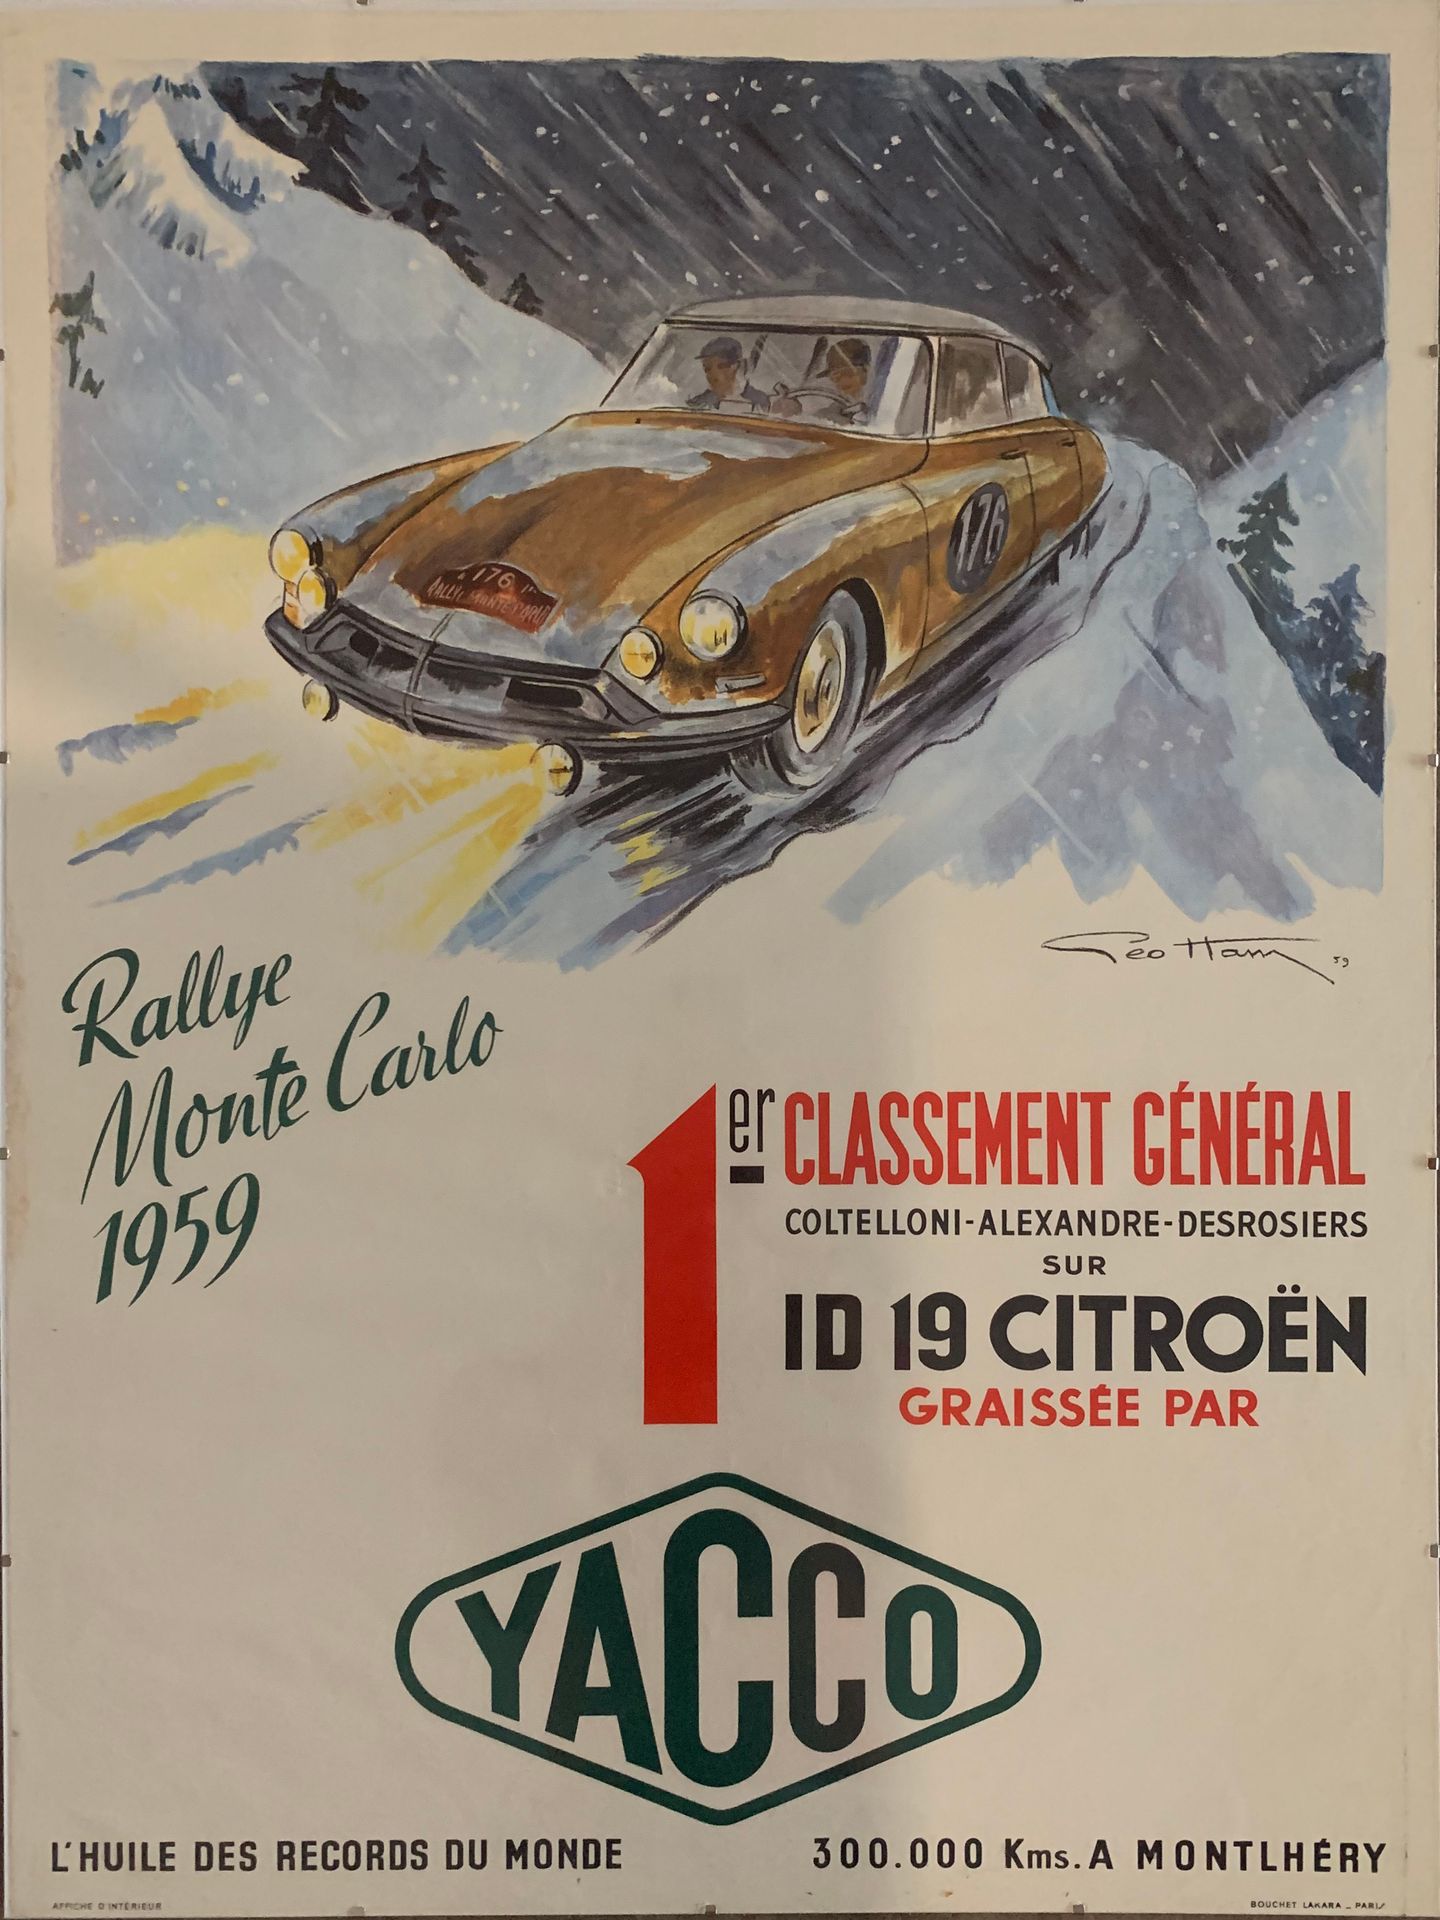 Rallye de MONTE-CARLO 1959 par GEO HAM MONTE-CARLO Rally 1959 by GEO HAM 
Promot&hellip;